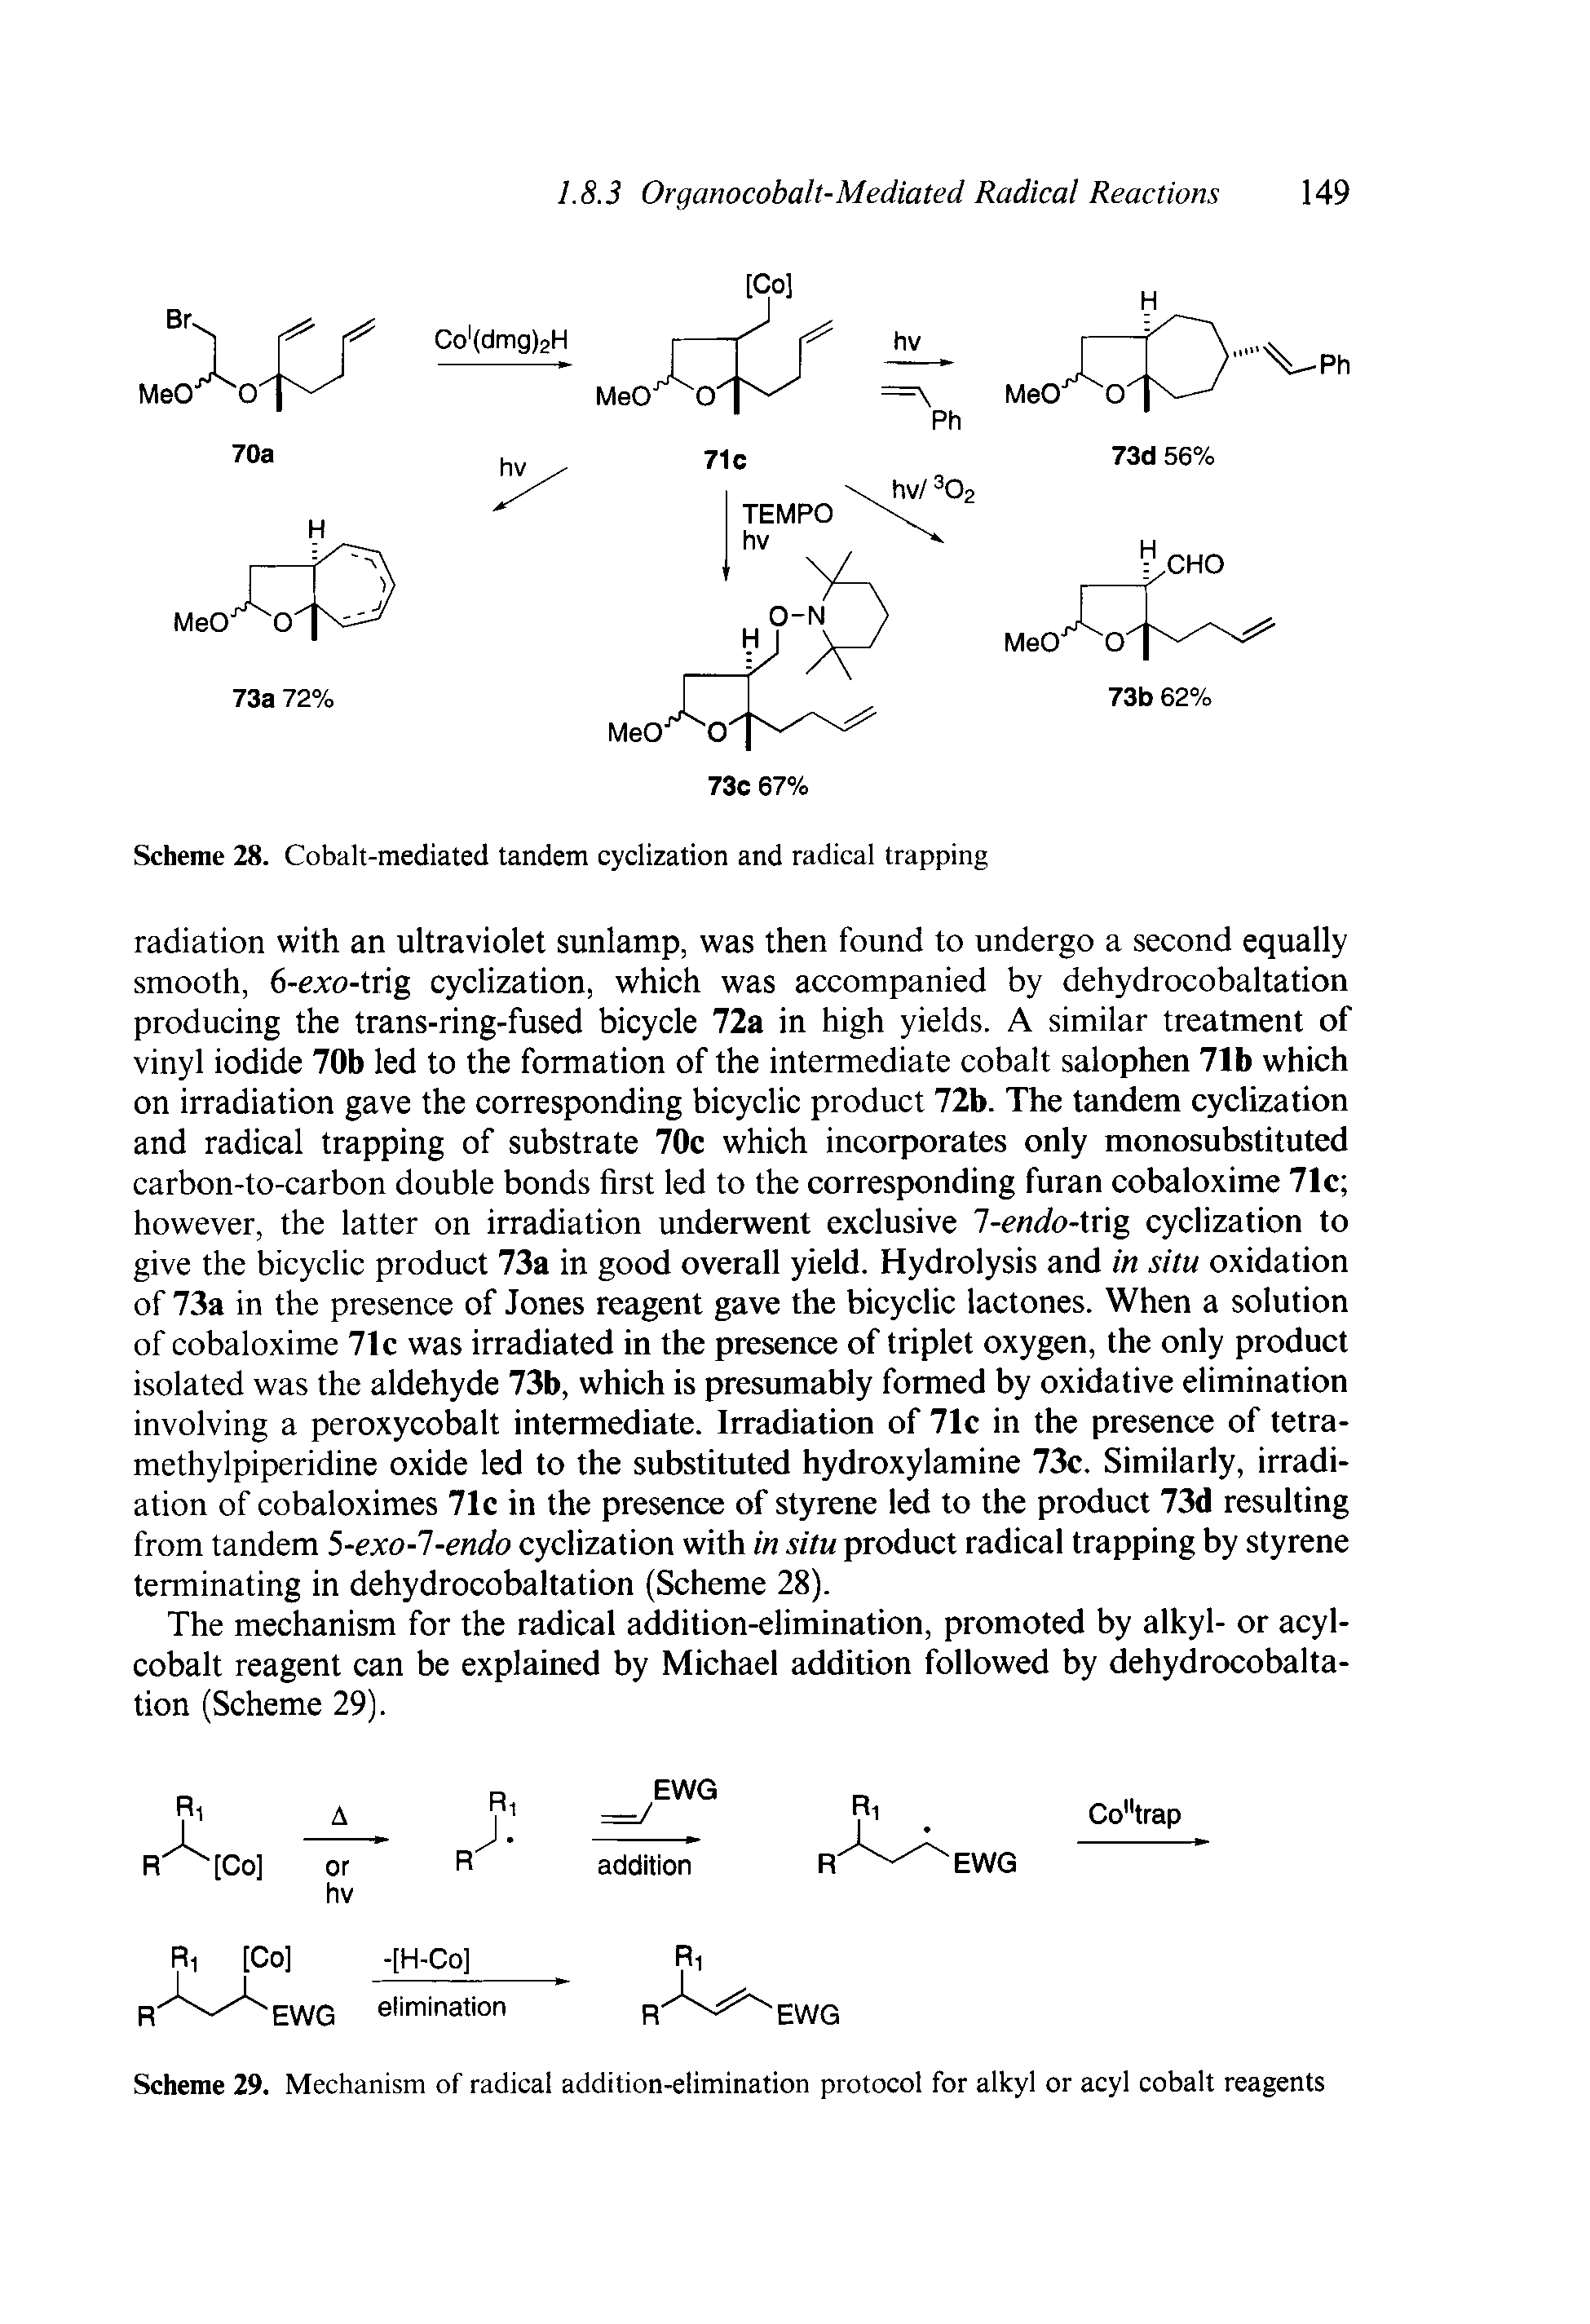 Scheme 29. Mechanism of radical addition-elimination protocol for alkyl or acyl cobalt reagents...